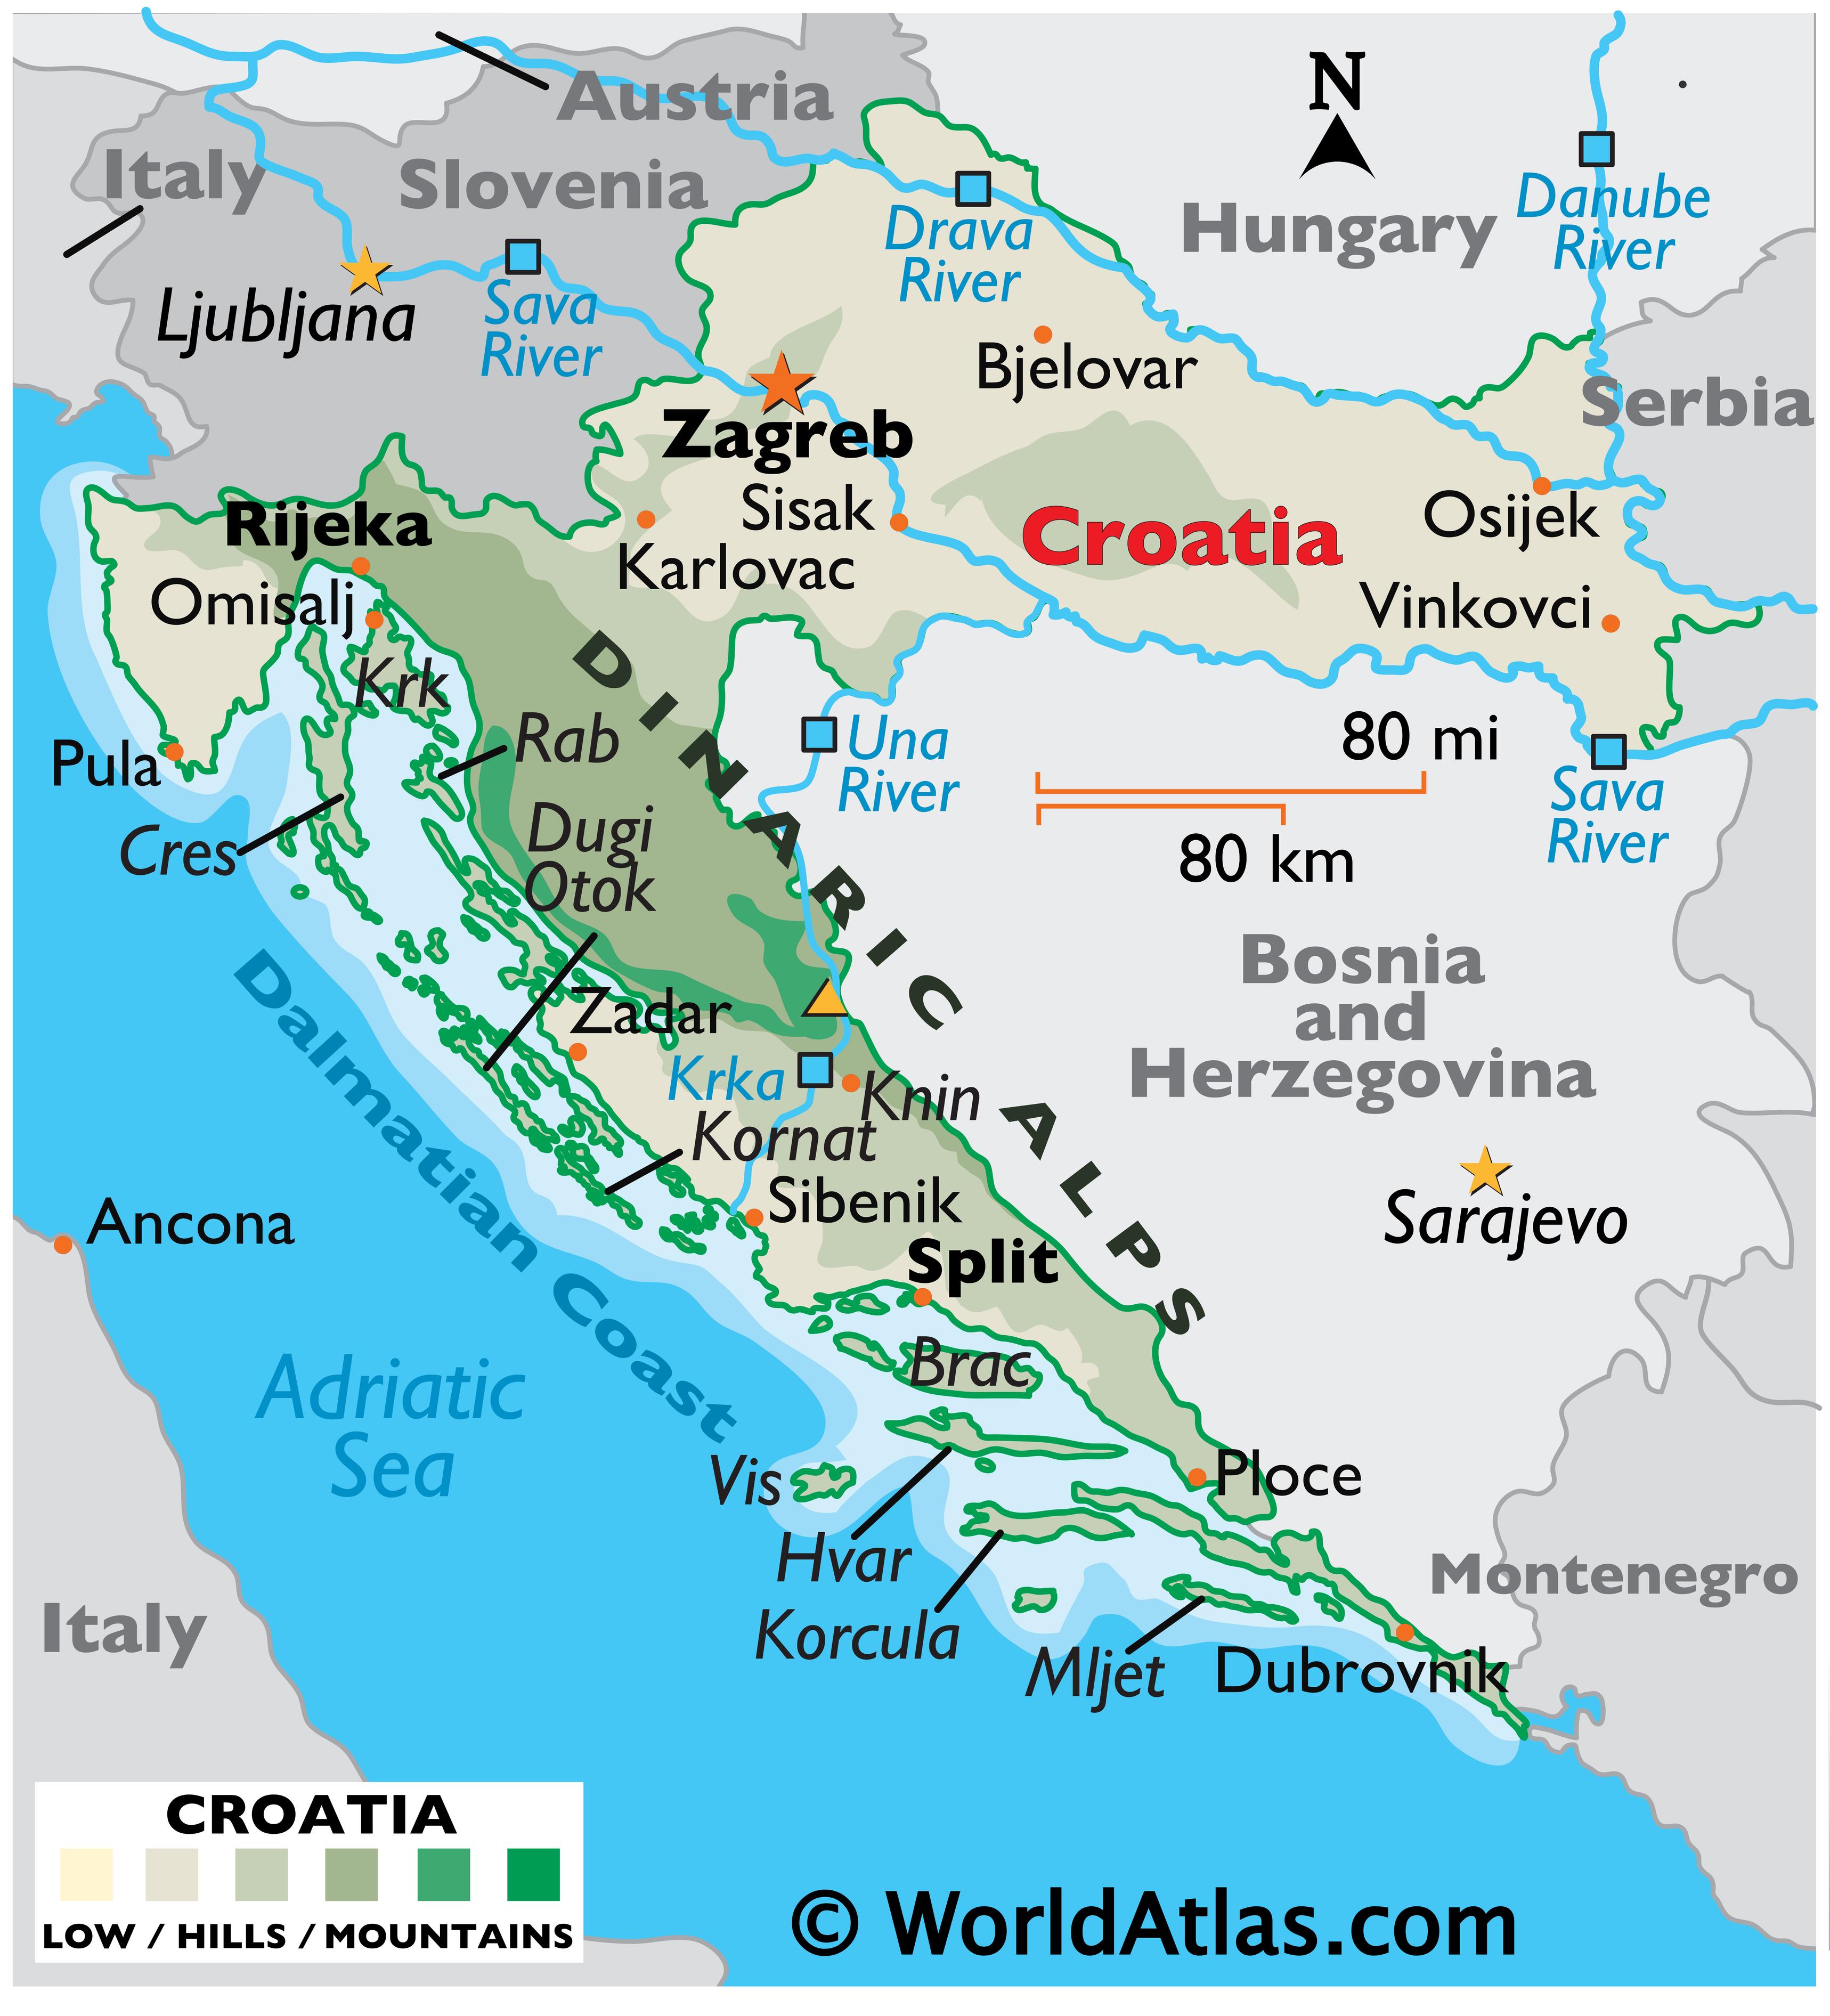 Croatia Maps & Facts - Atlas